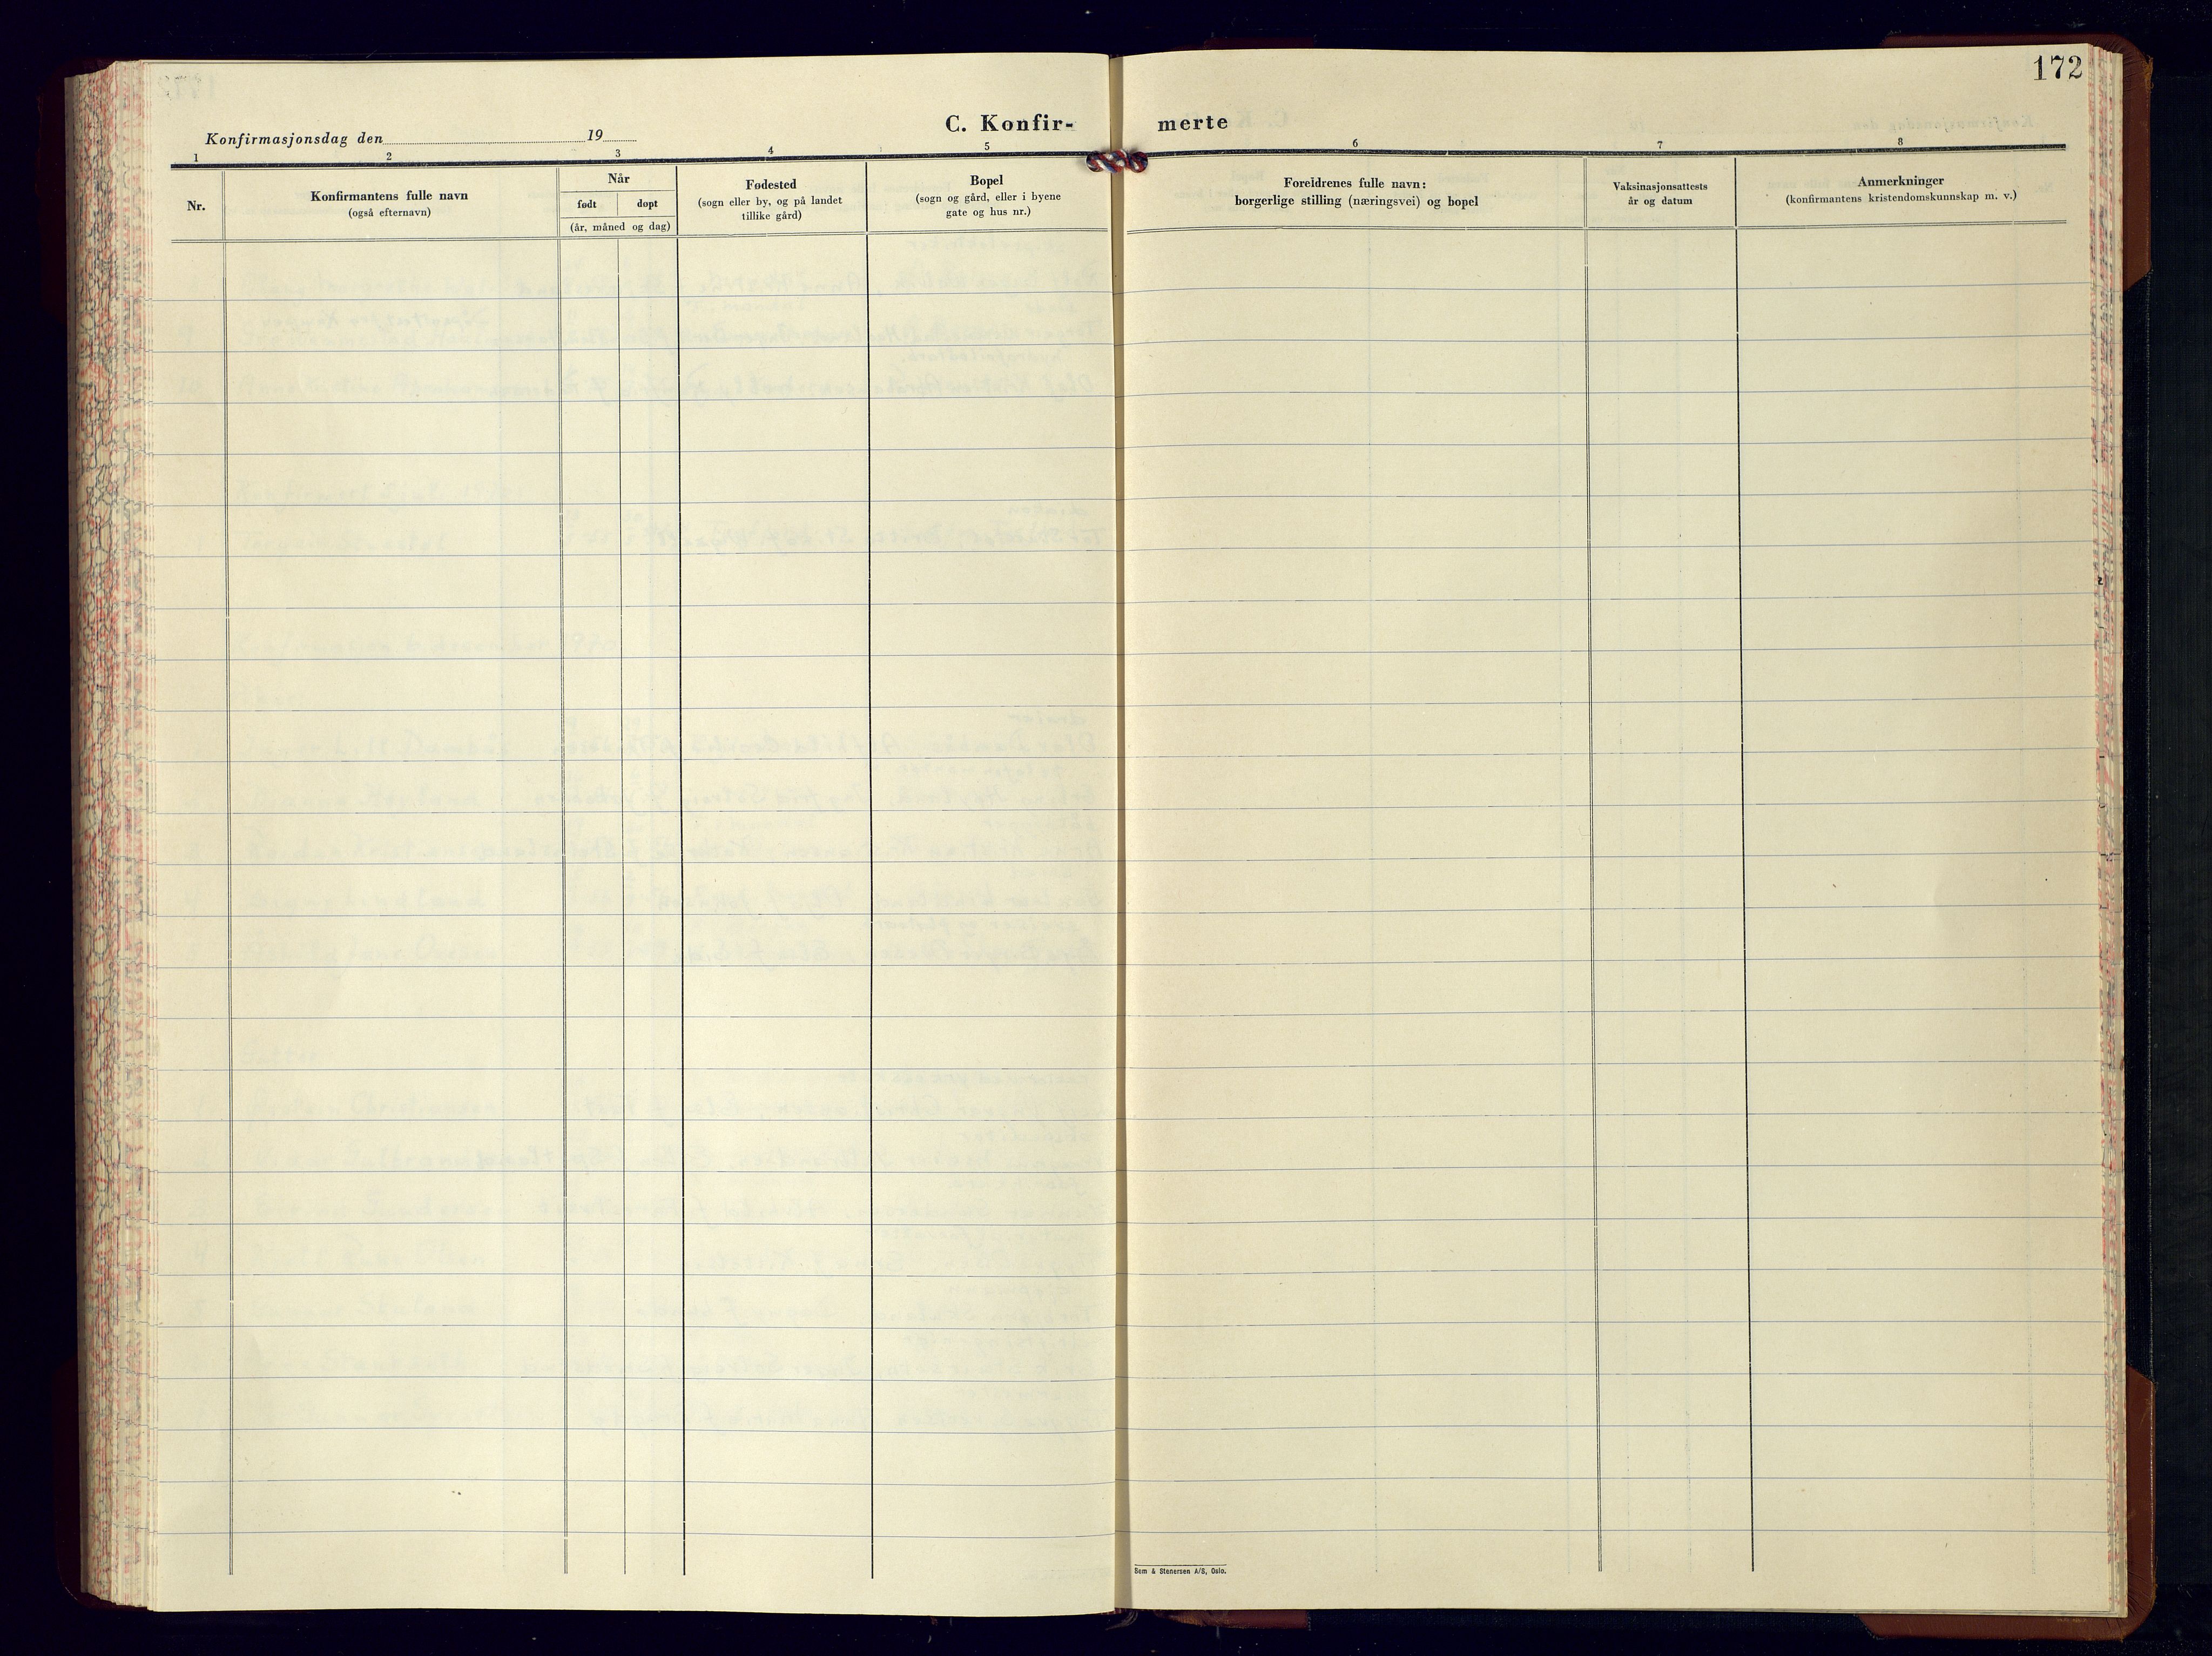 Mandal sokneprestkontor, SAK/1111-0030/F/Fb/Fba/L0015: Parish register (copy) no. B 9, 1951-1970